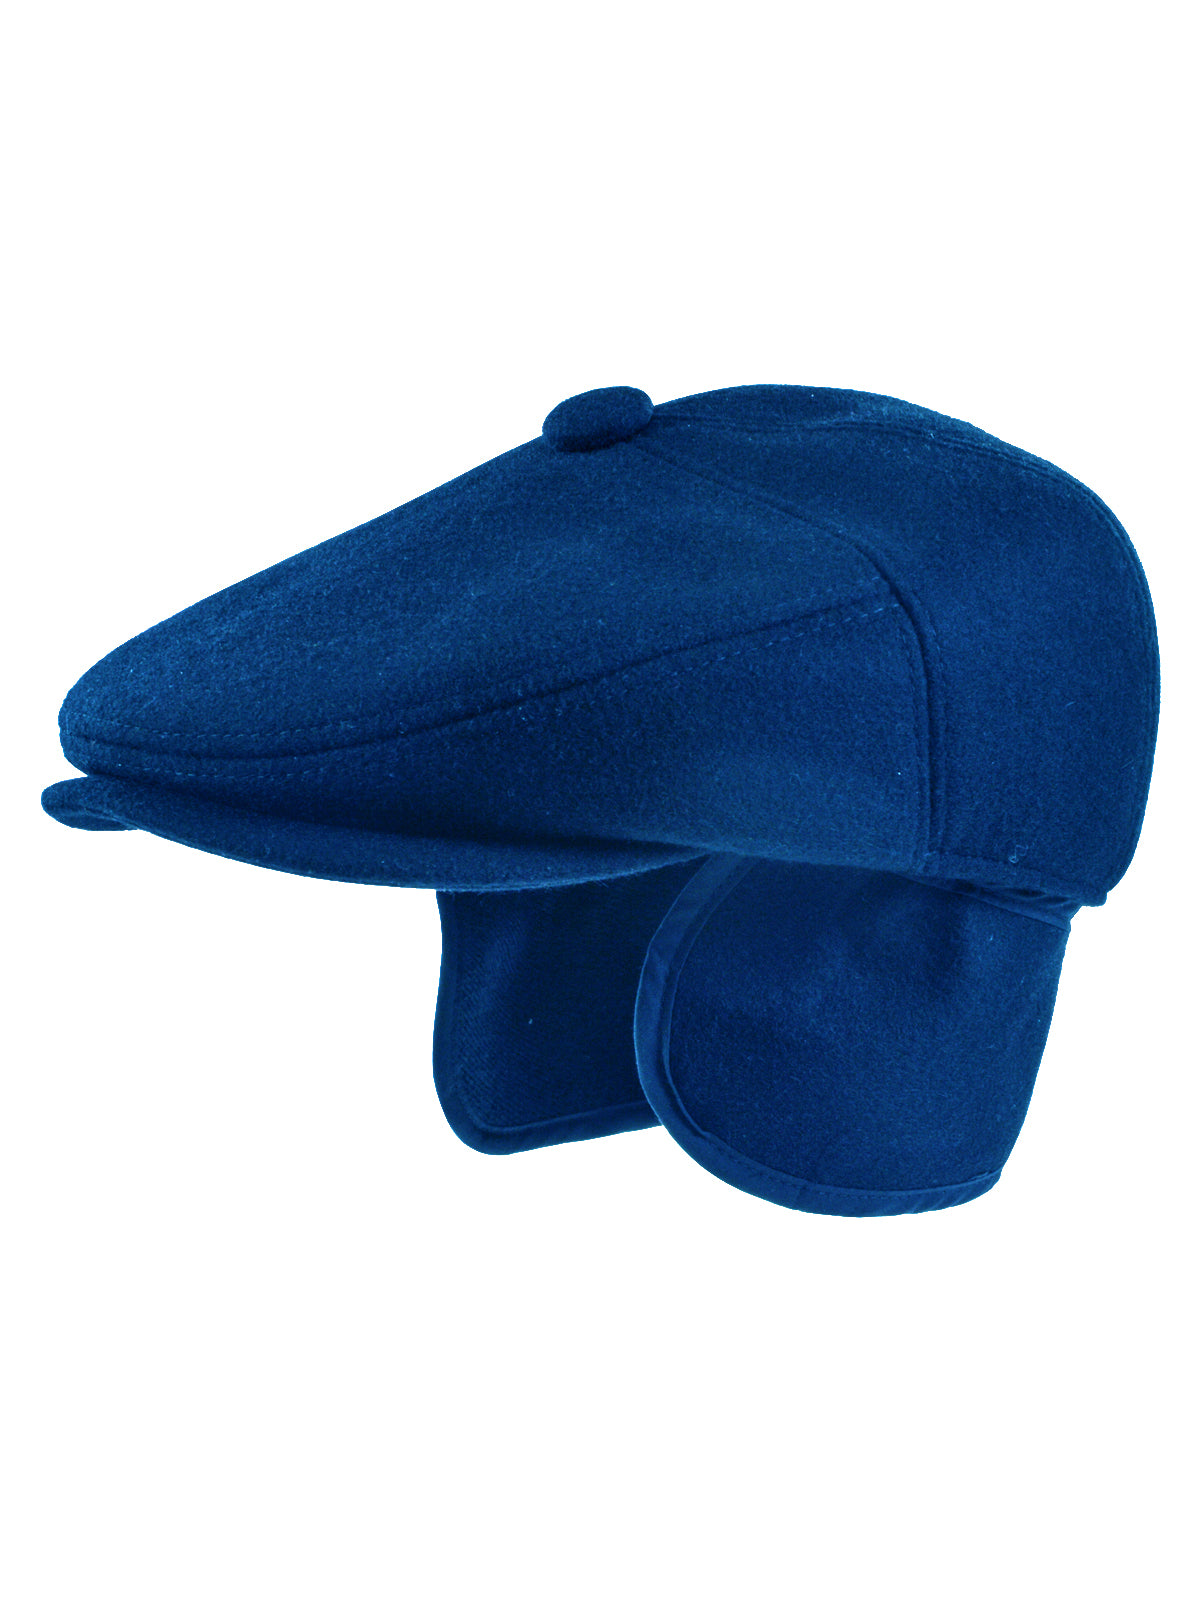 Dobbs Wool Blend Men's 'Flapper' Cap in True Blue - Regular Sizes